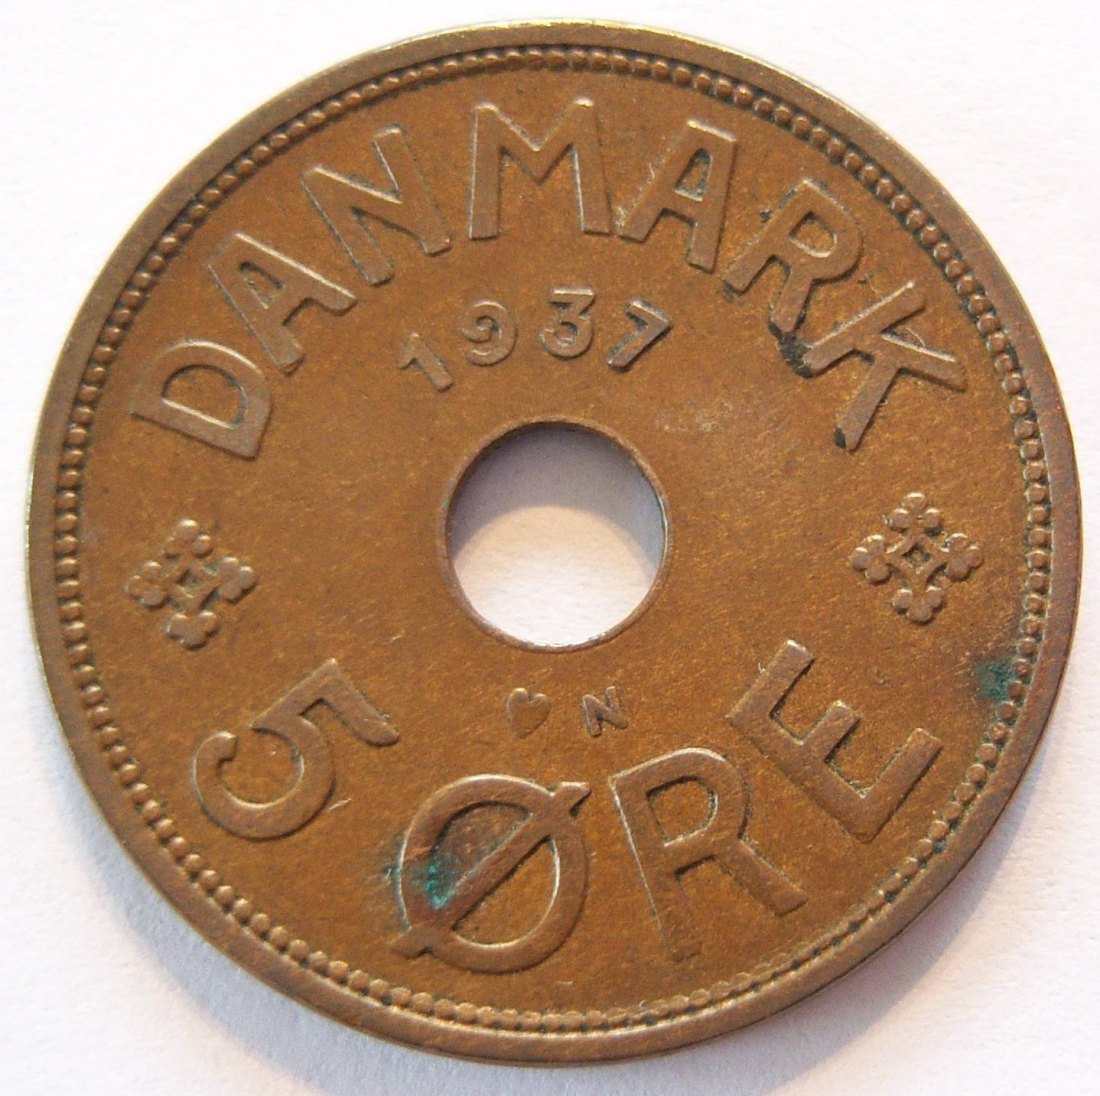  Dänemark 5 Öre 1937   